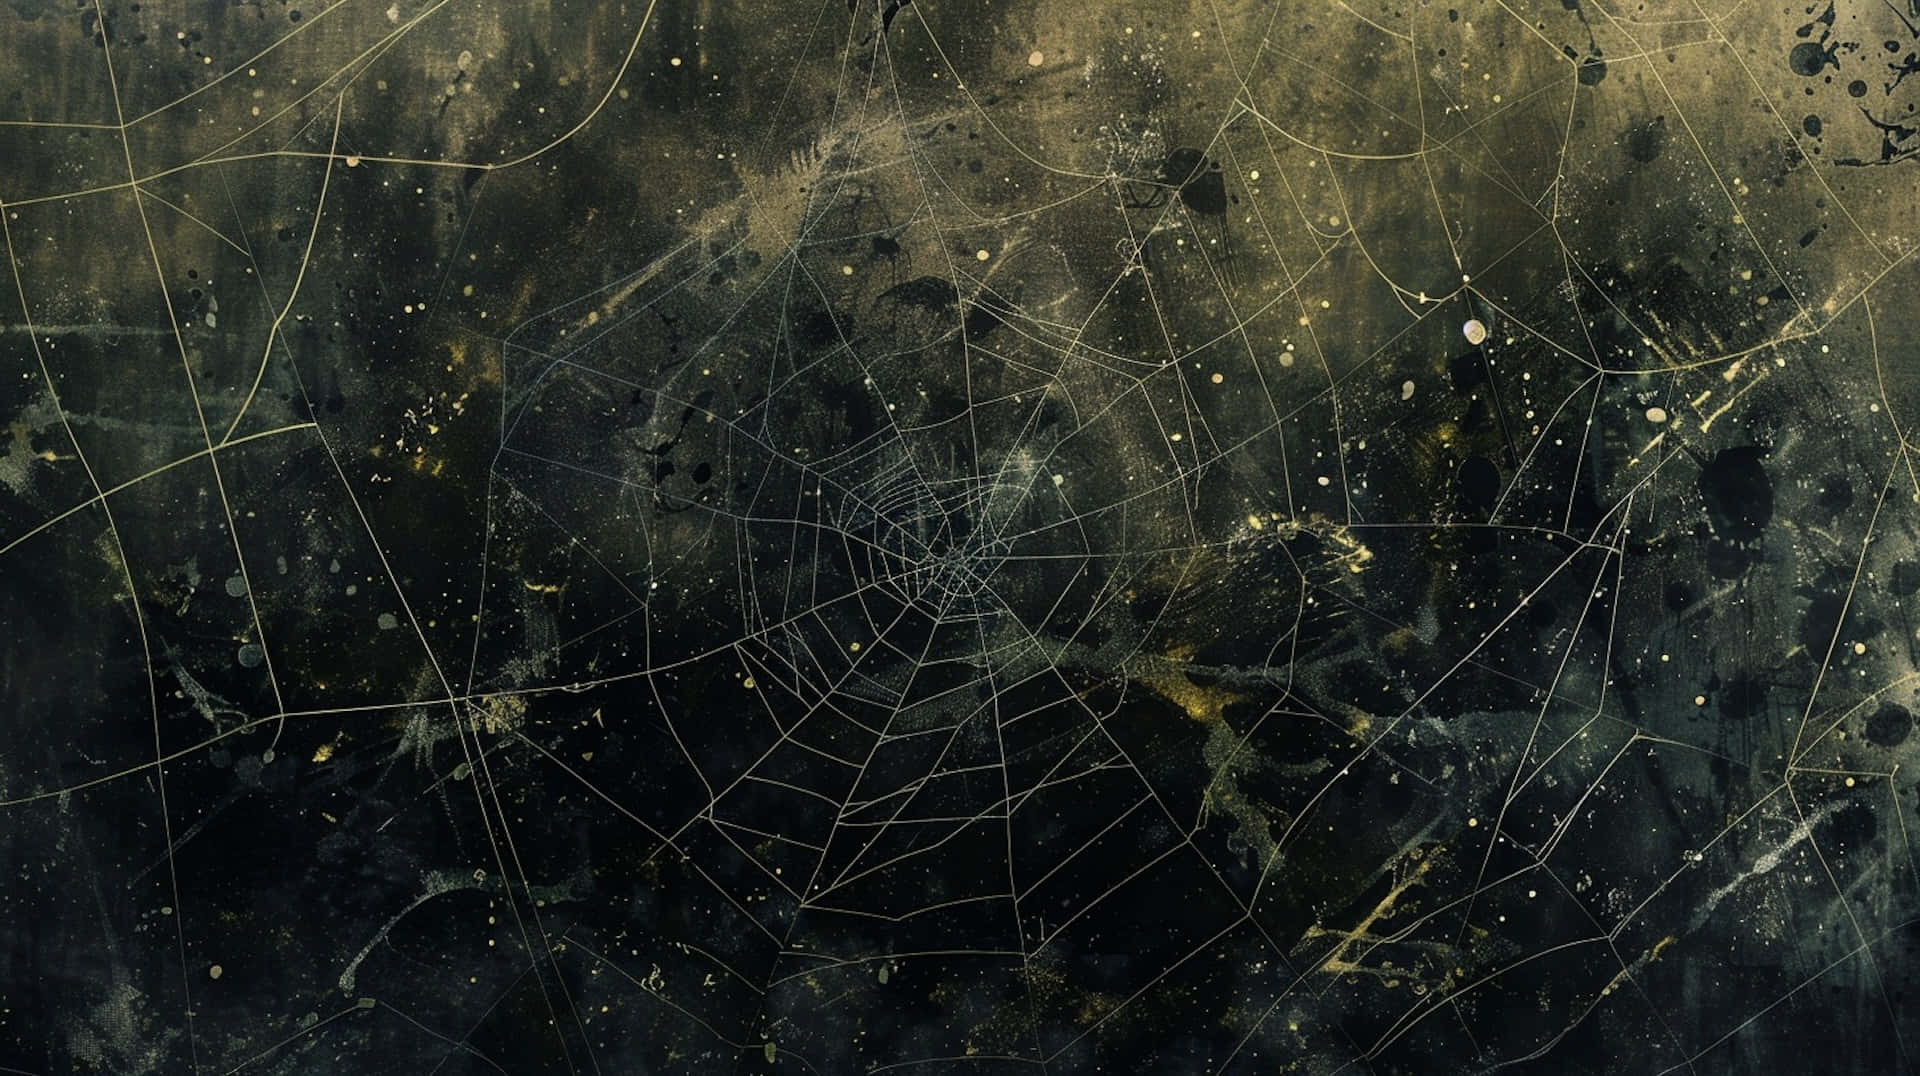 Abstract Spider Web Artwork Wallpaper